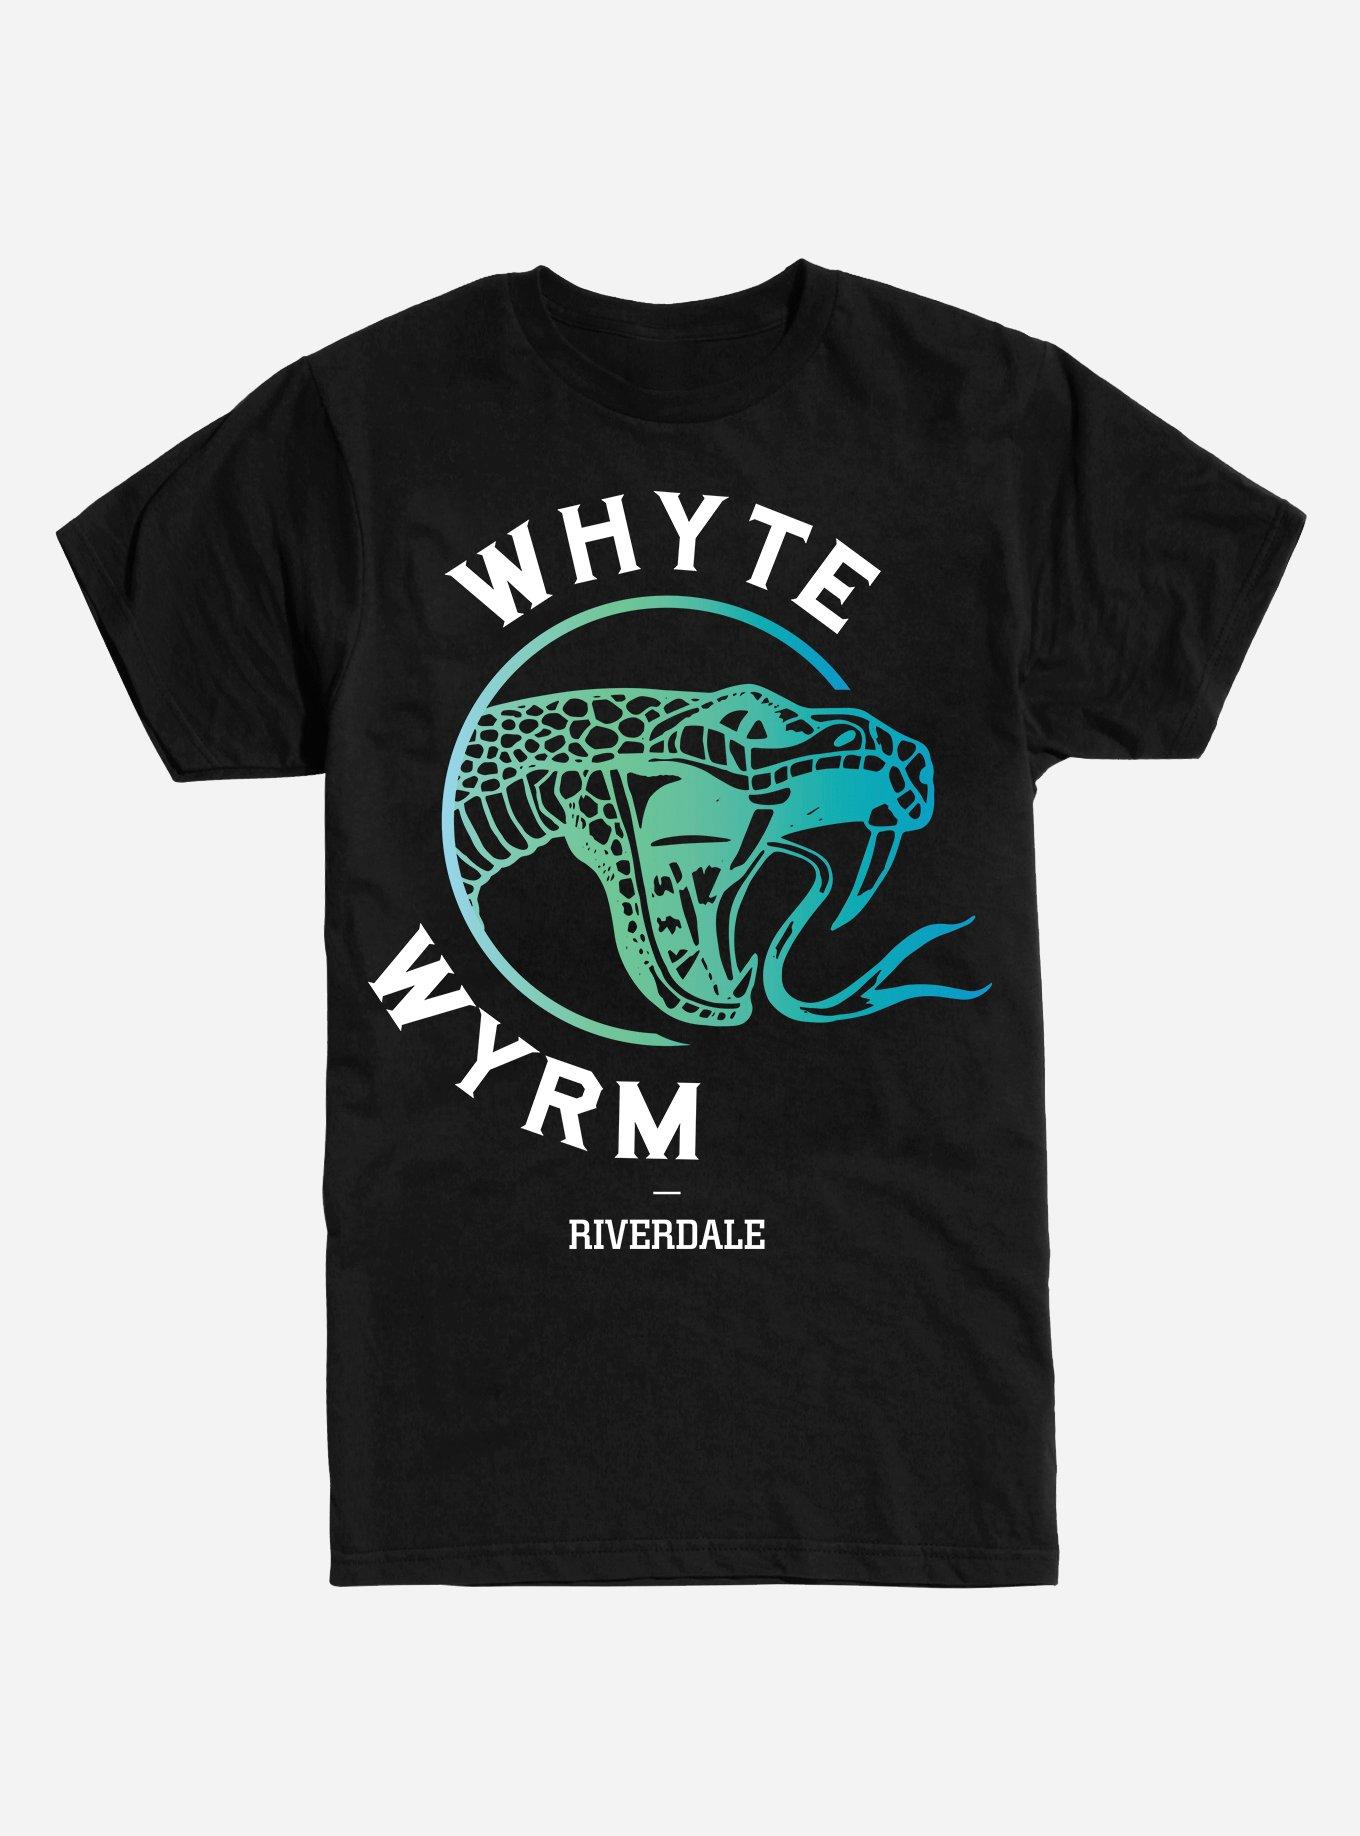 Riverdale Whyte WYRM Black T-Shirt, BLACK, hi-res